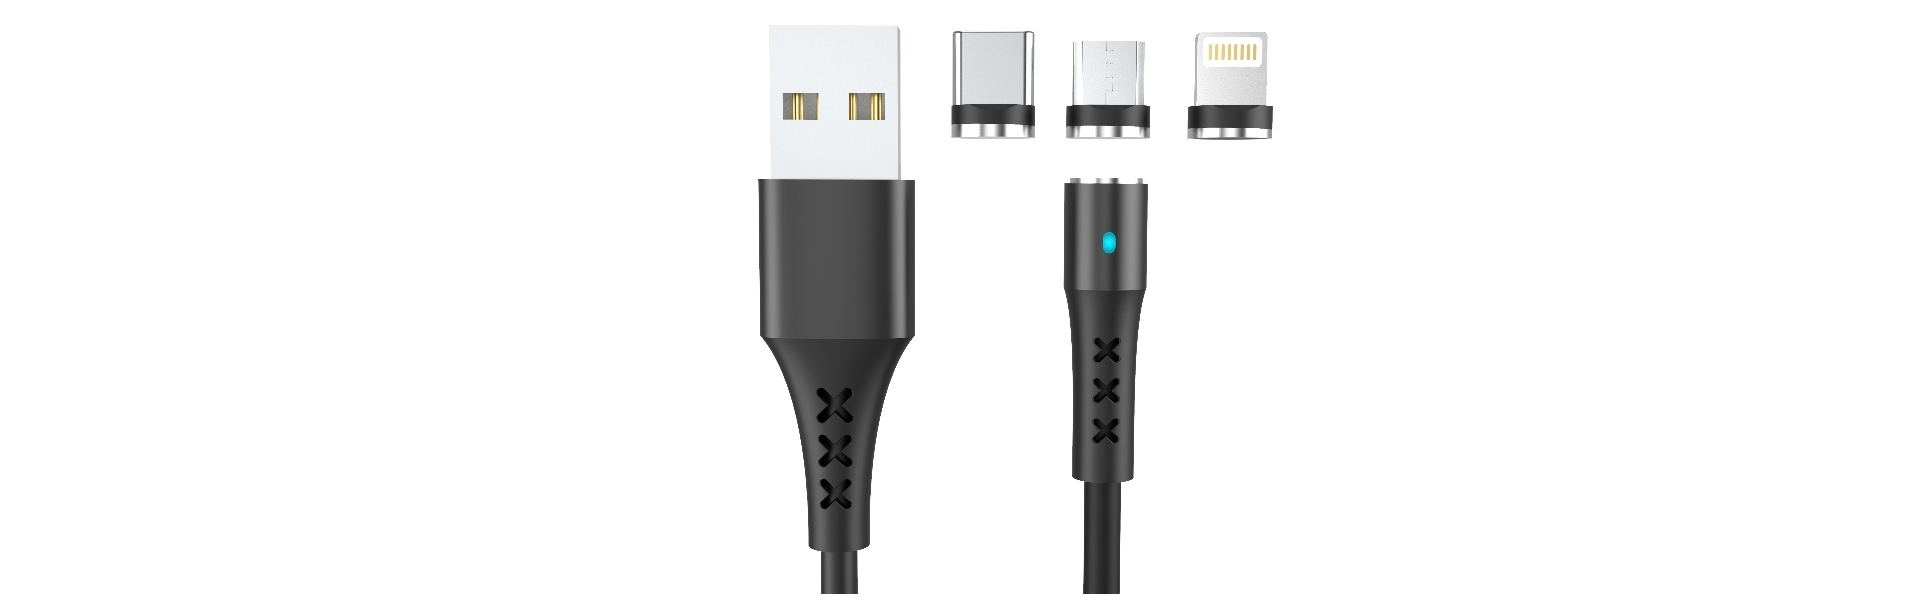 USB καλωδιακή, USB καλώδιο δεδομένων,καλώδιο δεδομένων,Dong Guan Rong Pin Electronic Technology Co.Ltd